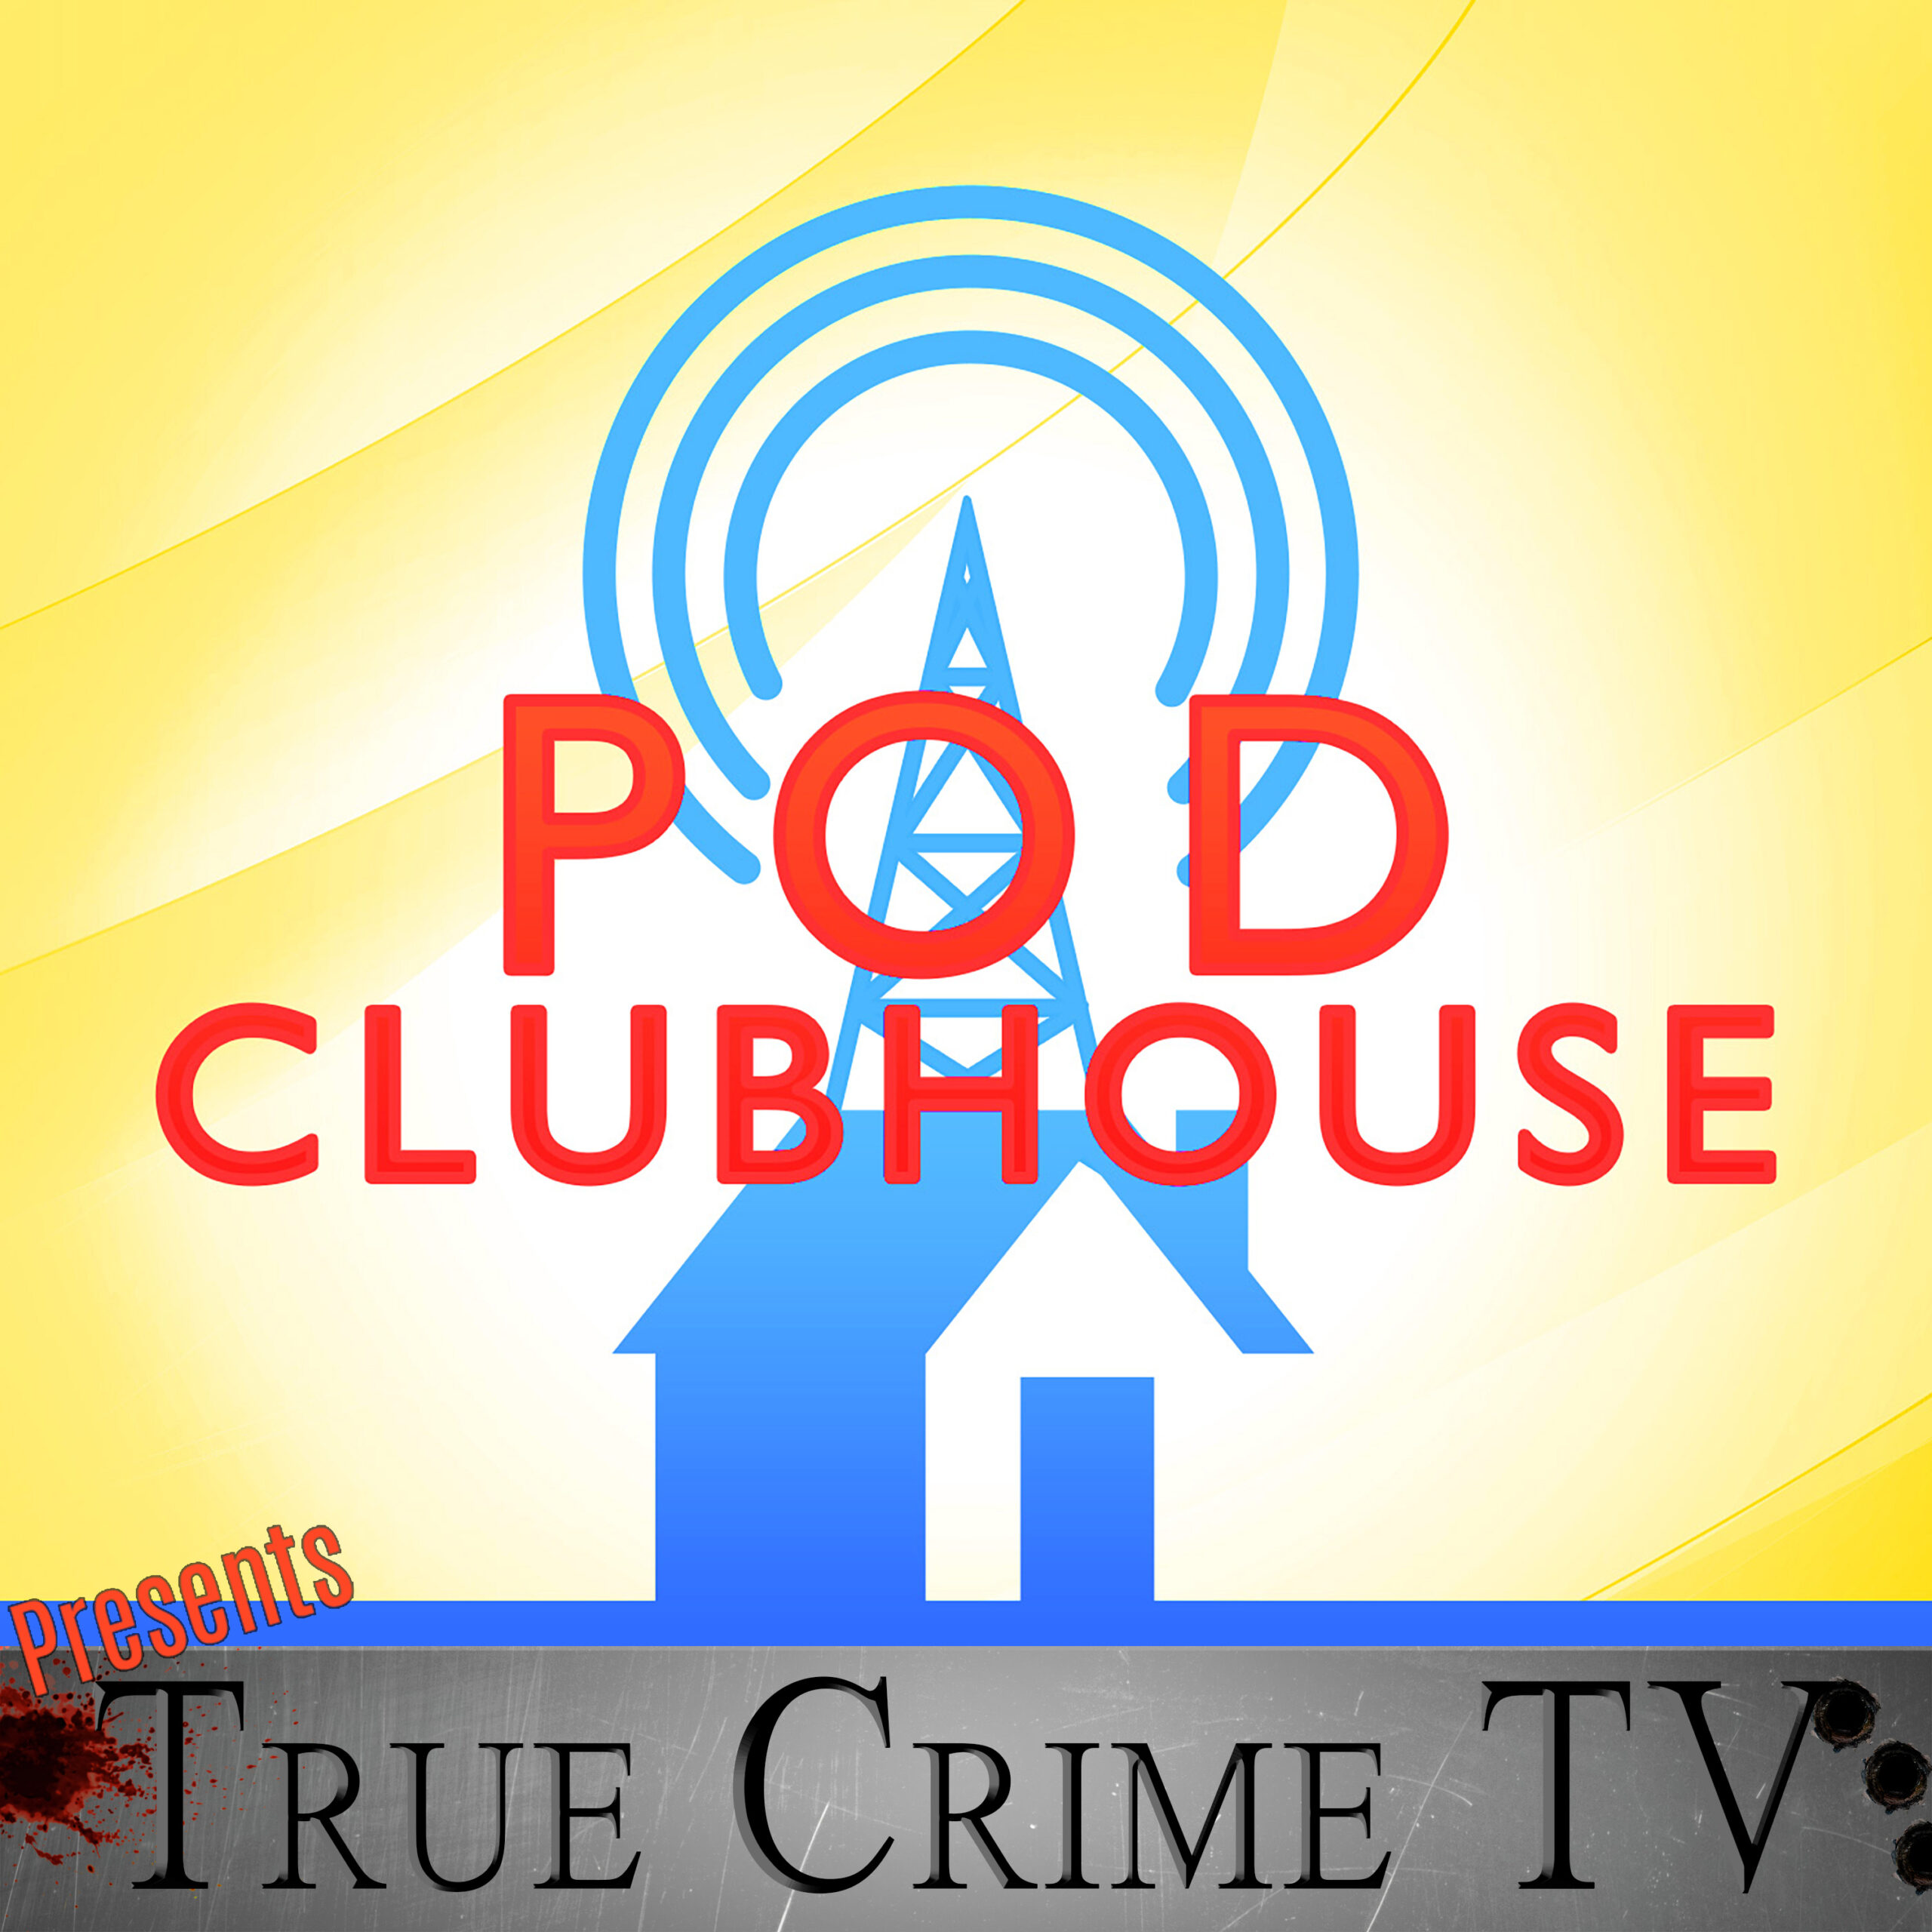 Pod Clubhouse's True Crime TV Podcast